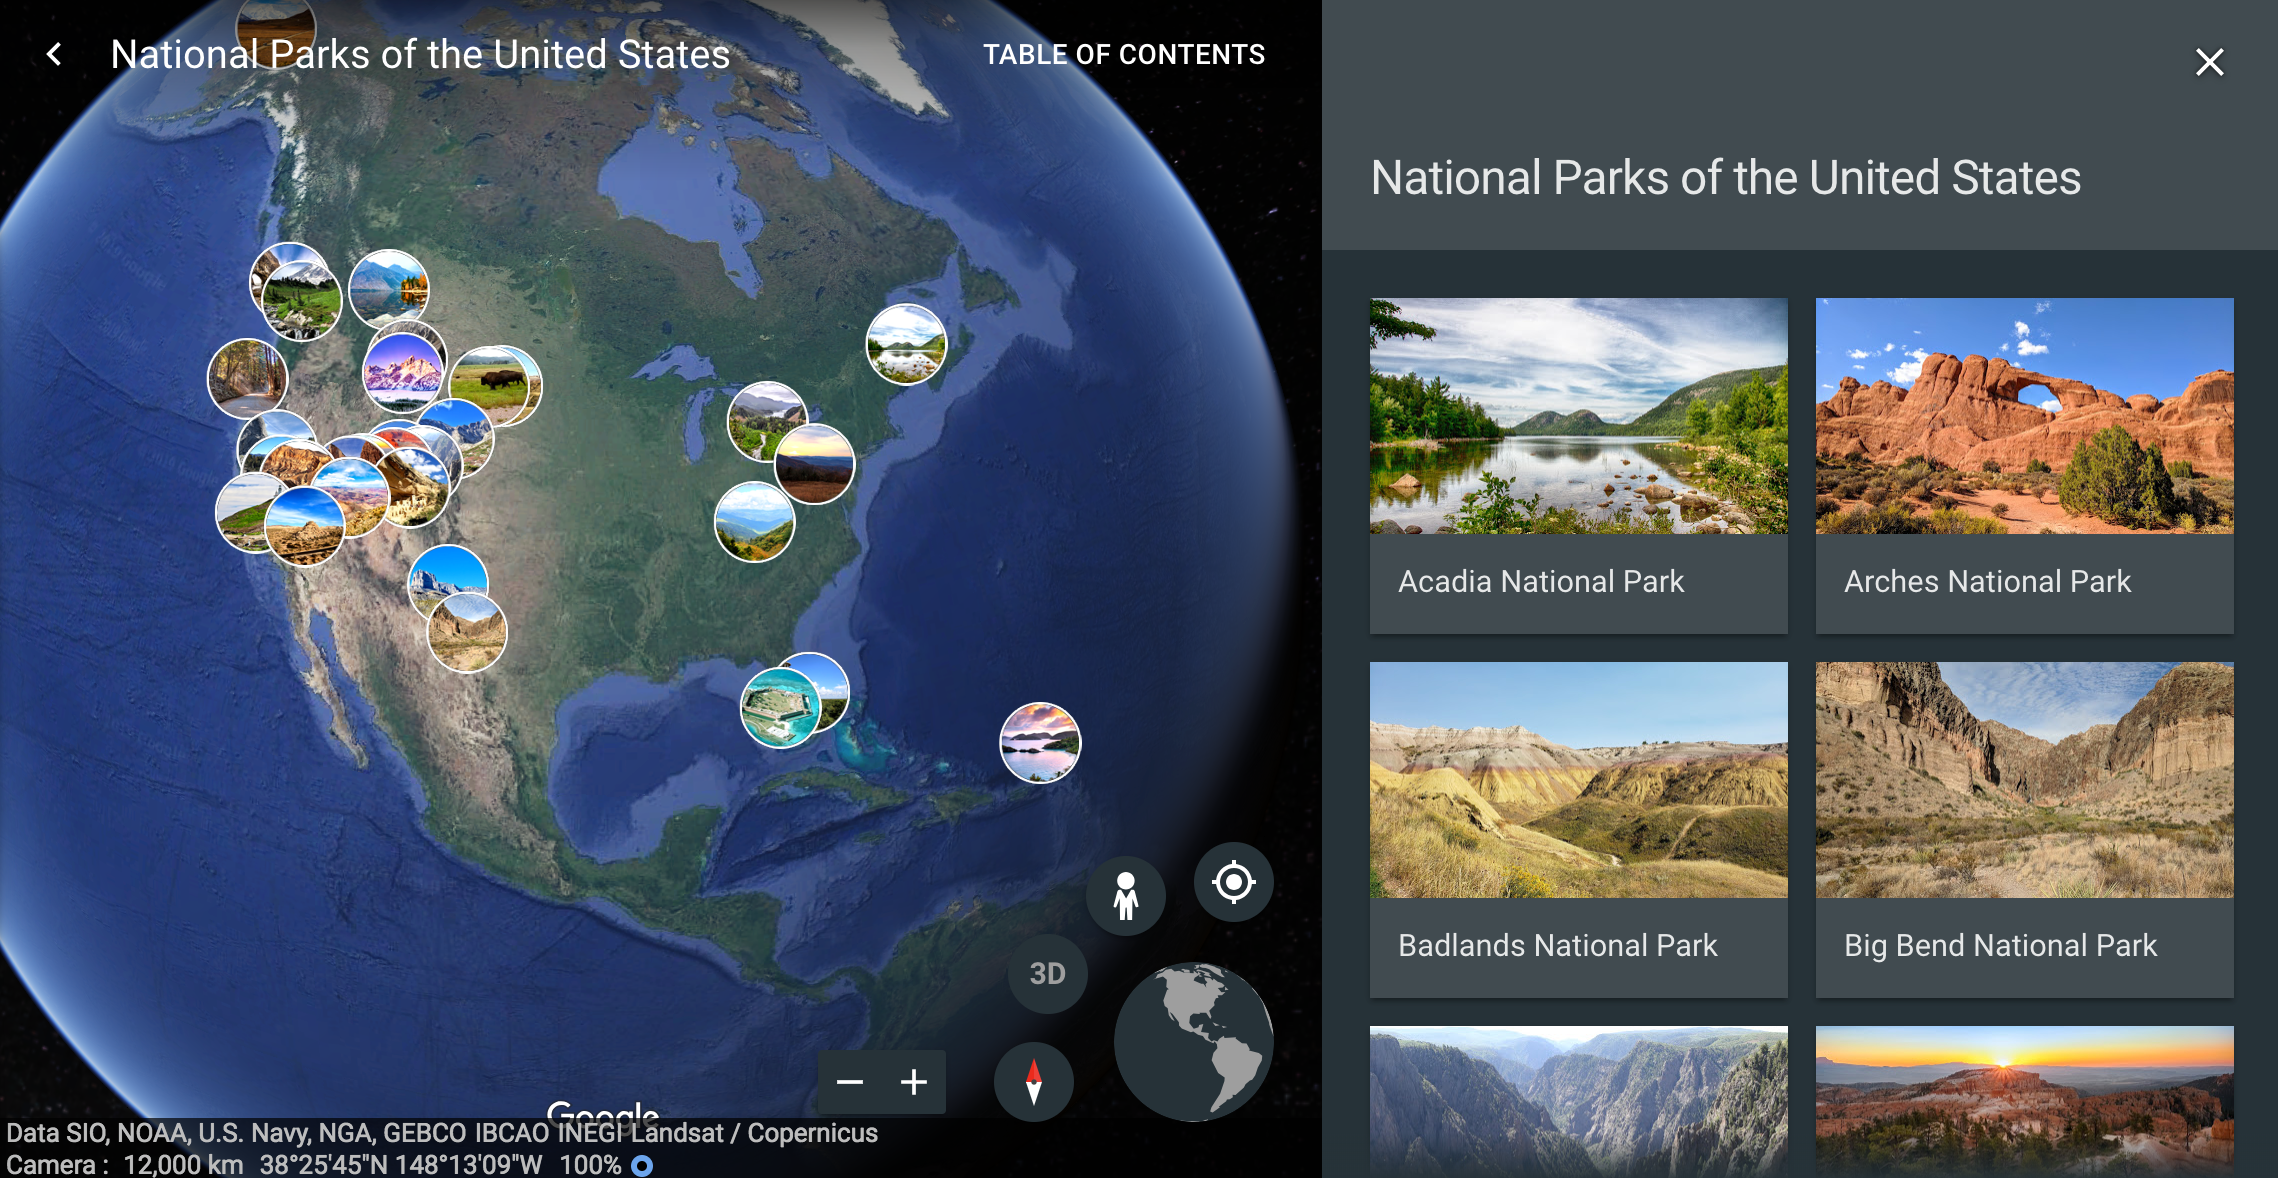 dom trail map virtual tour